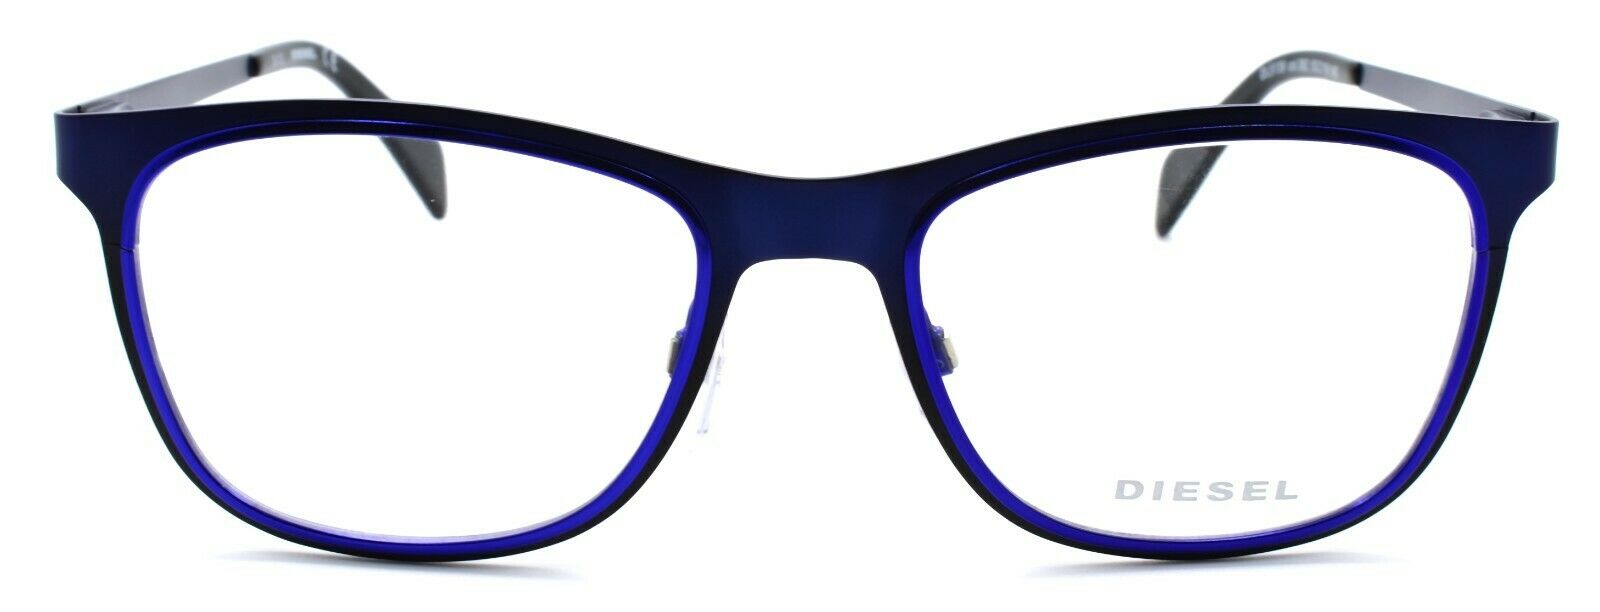 2-Diesel DL5139 092 Unisex Eyeglasses Frames 53-19-145 Blue Two Tone-664689669035-IKSpecs